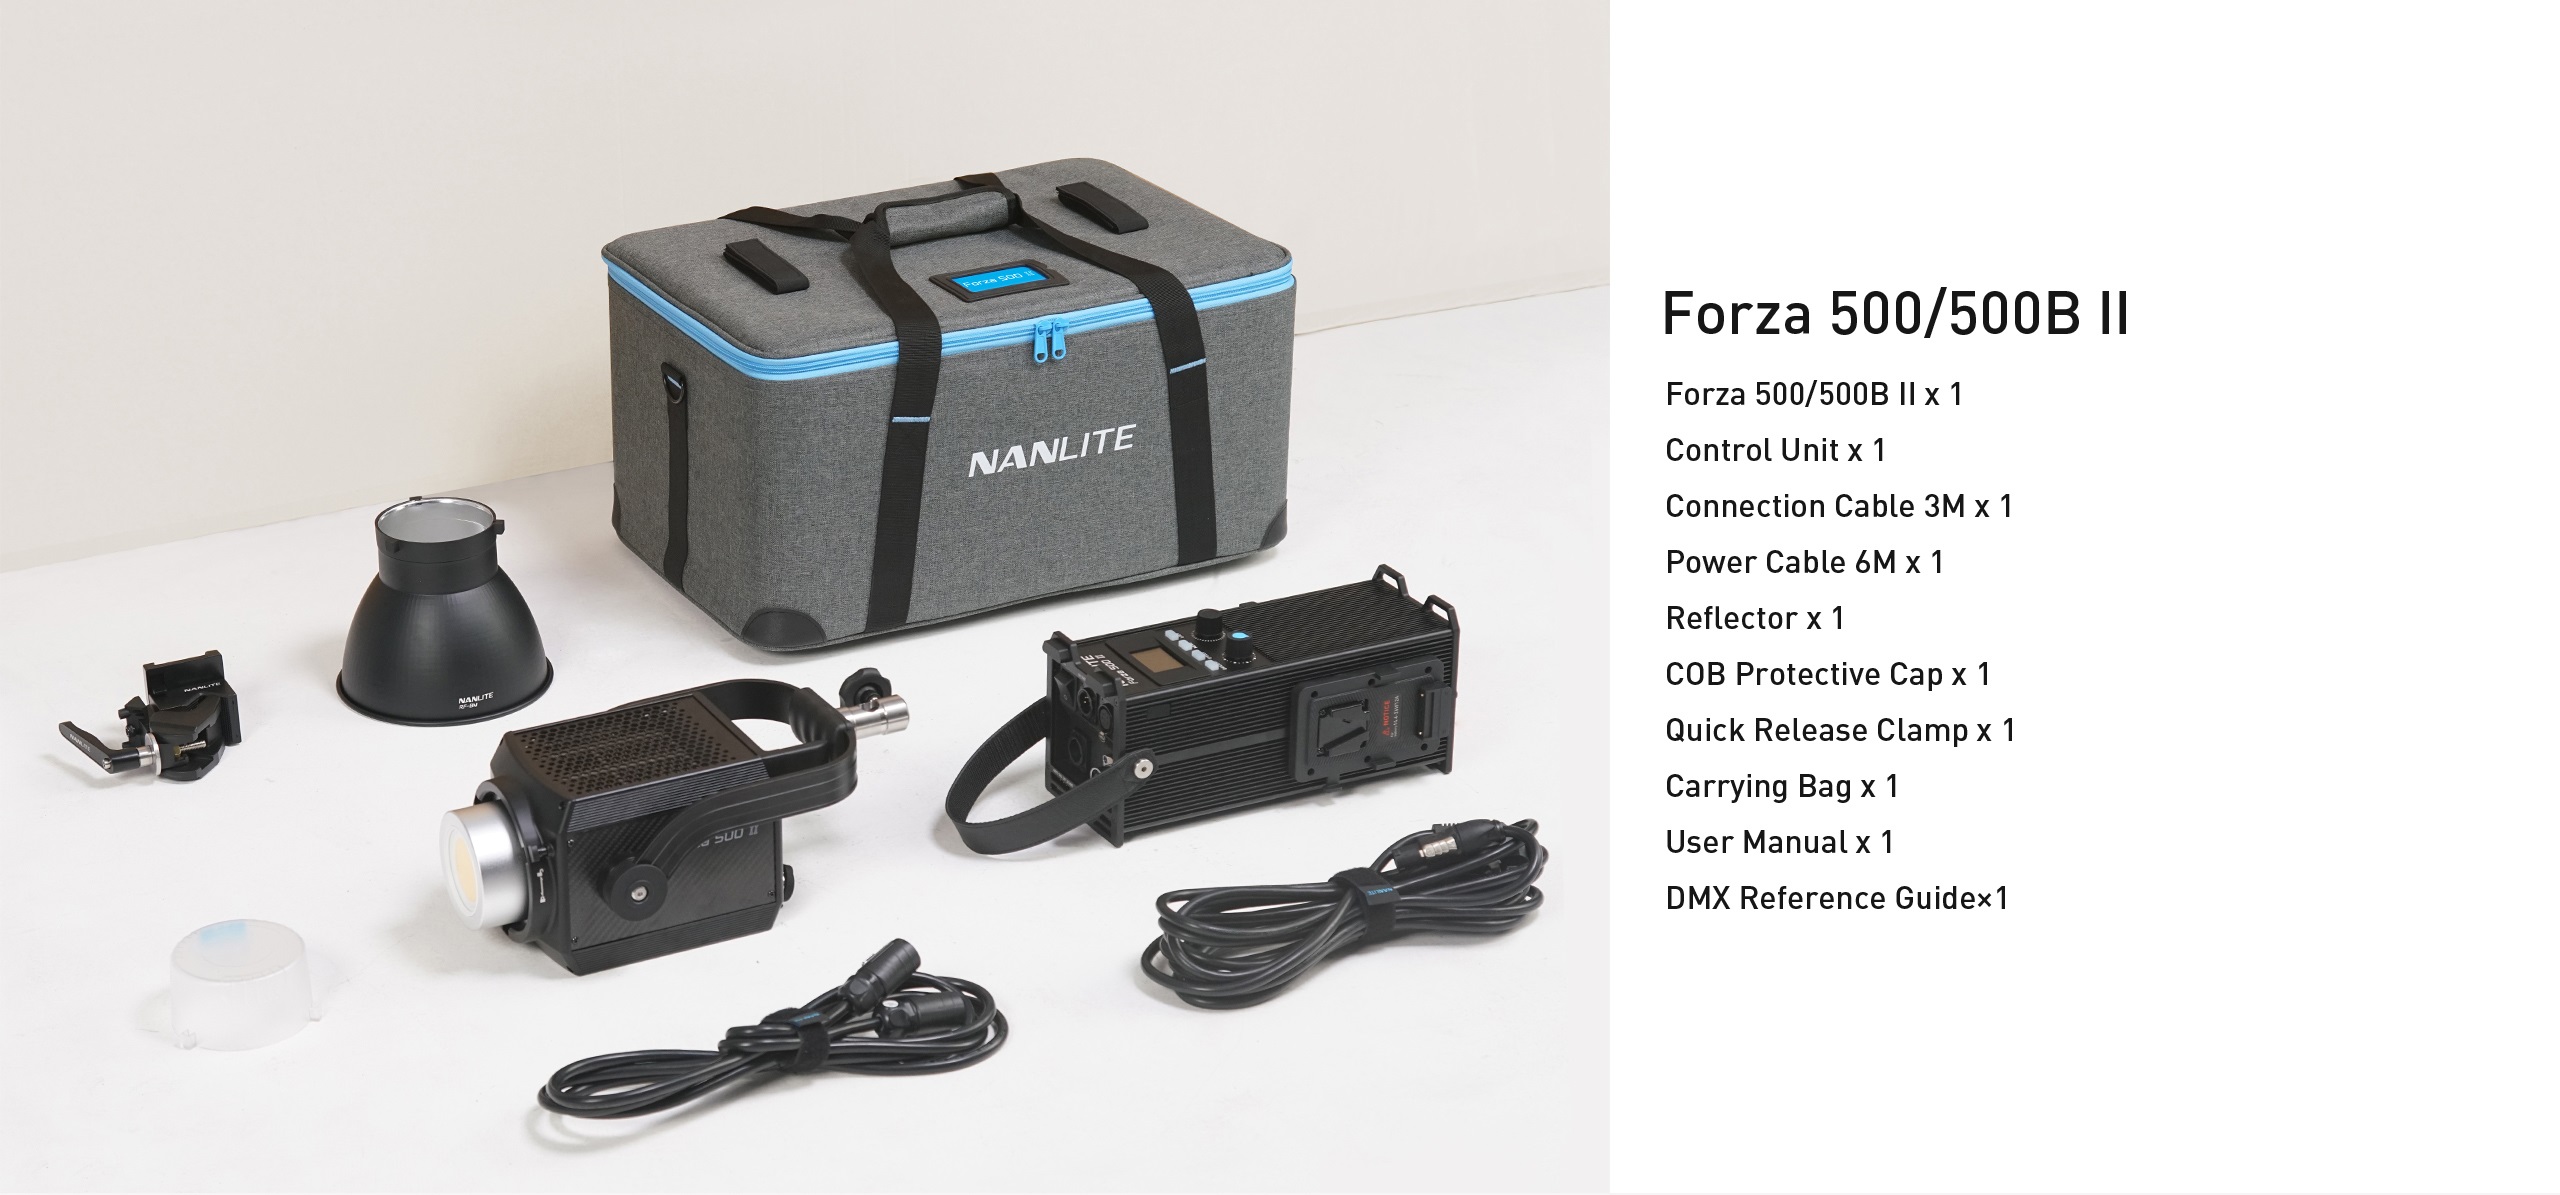 đèn Nanlite Forza 500 500b II